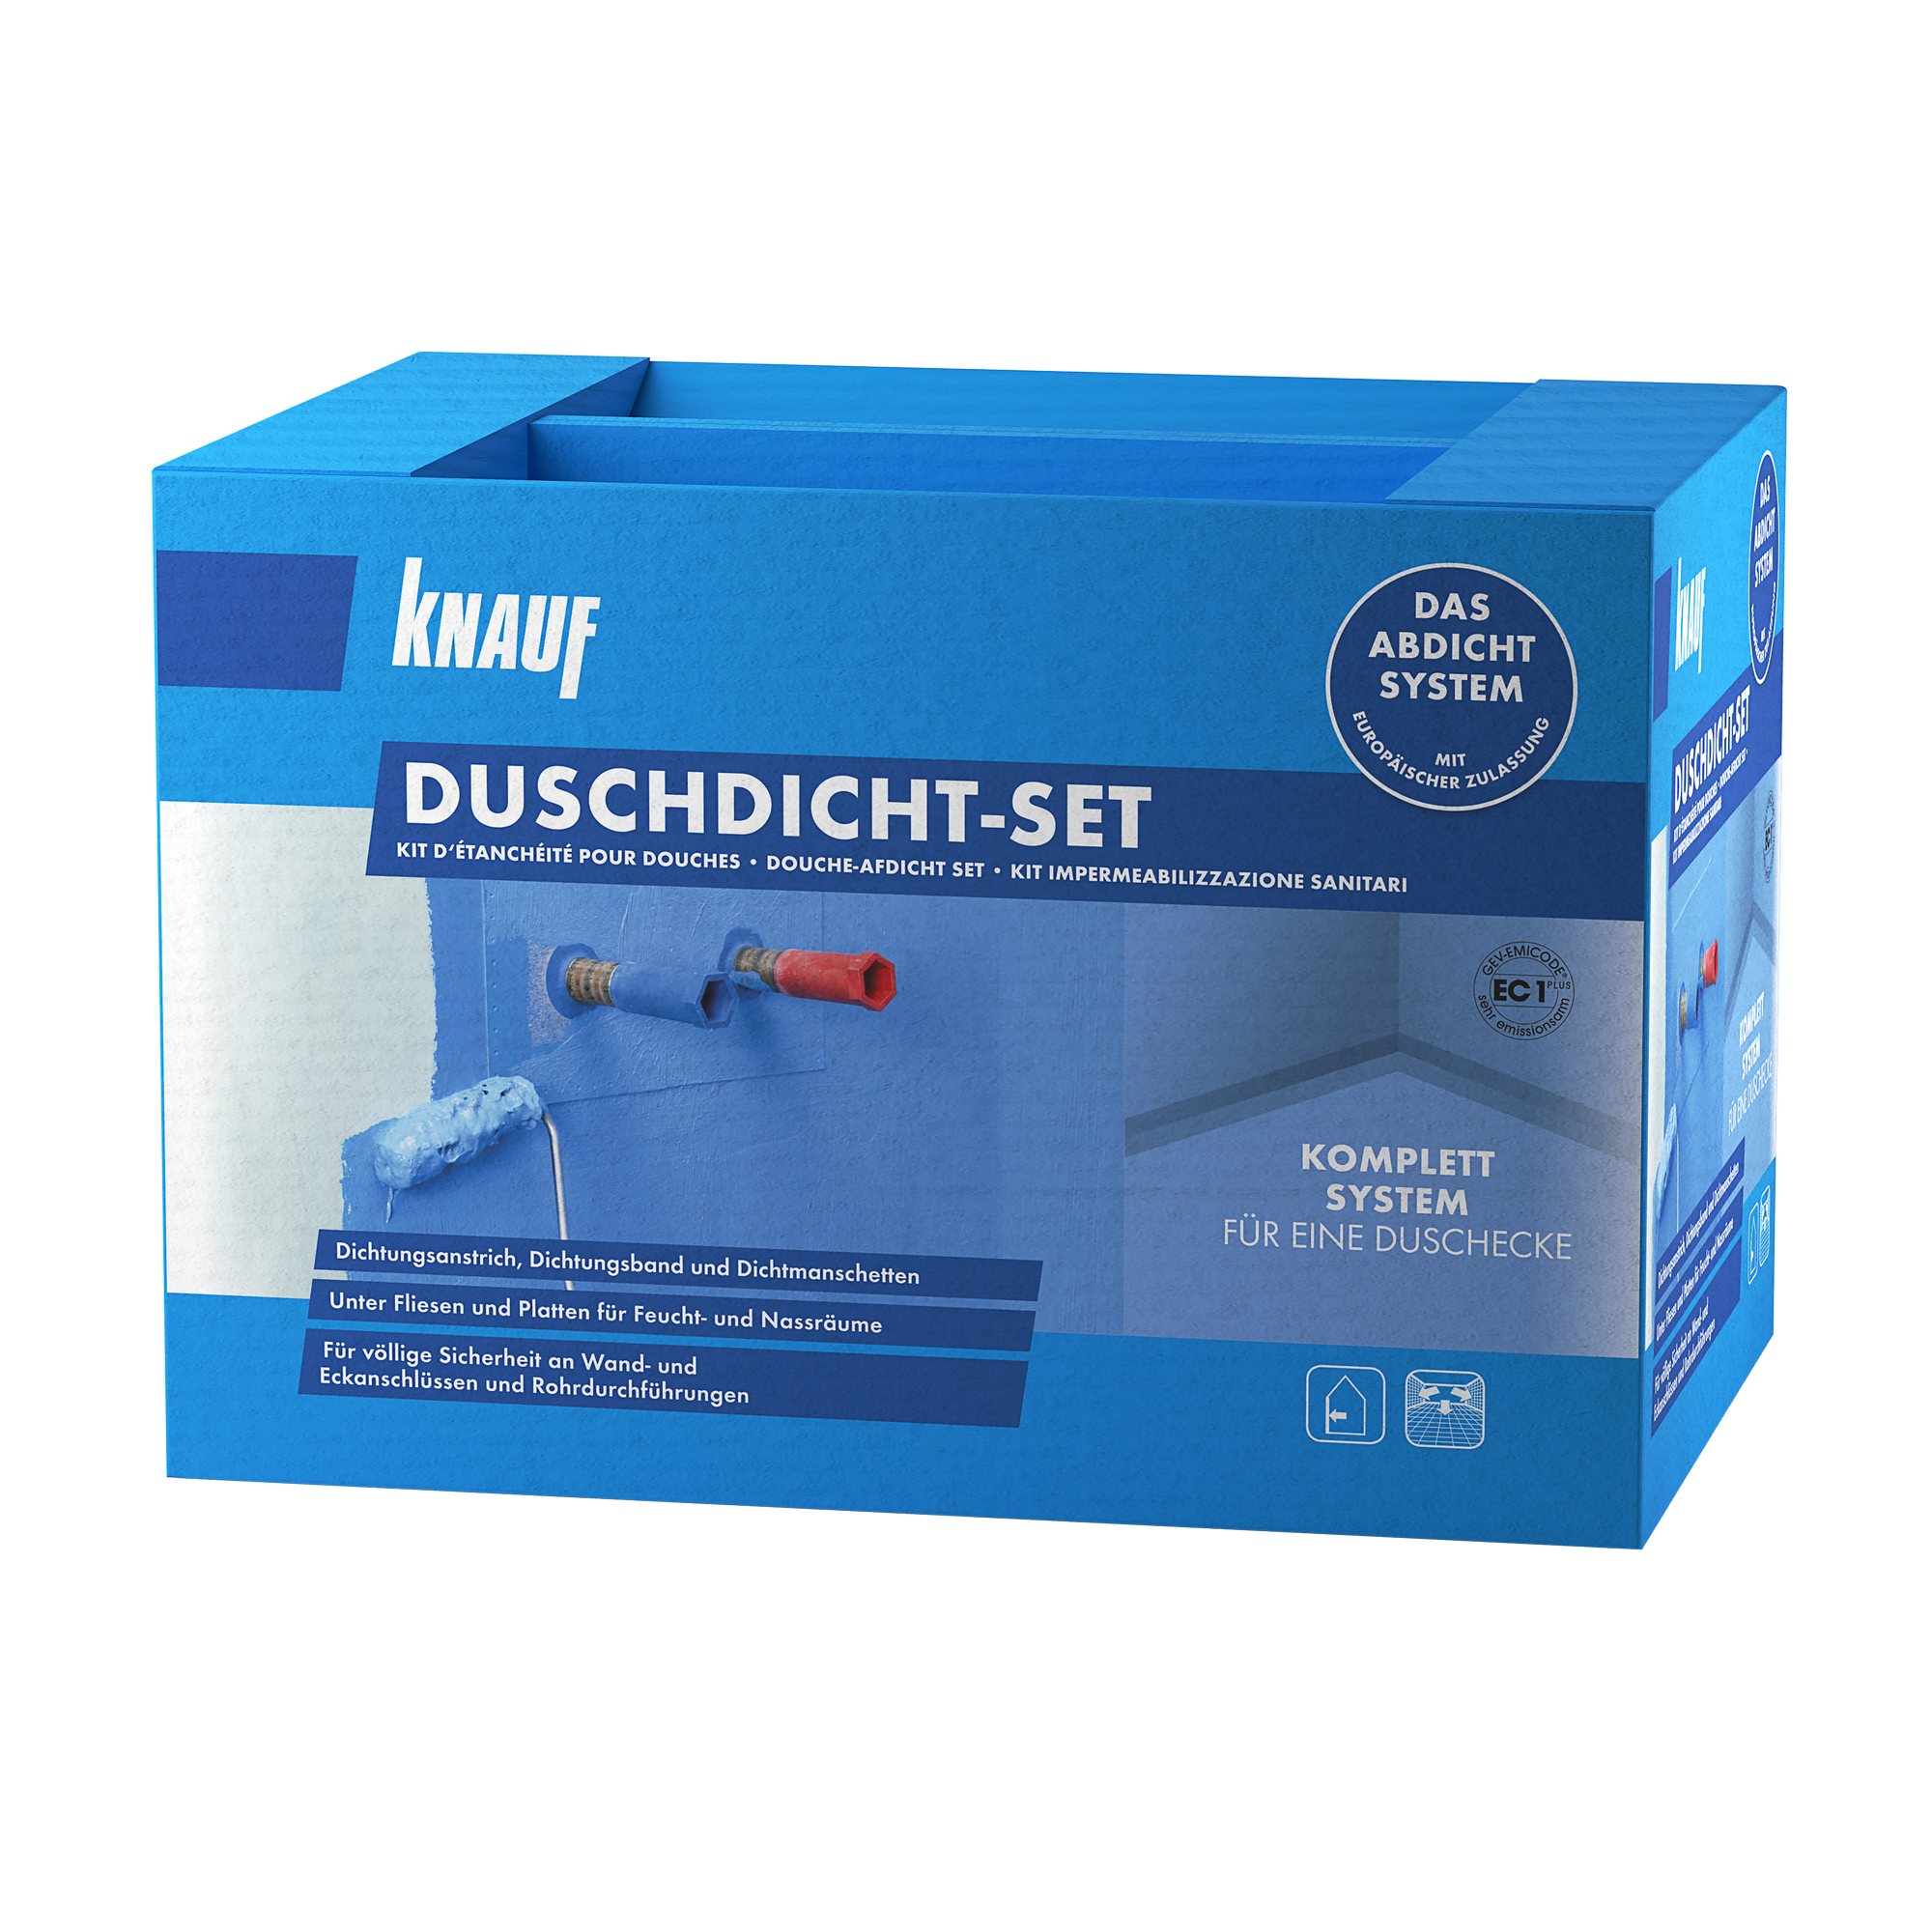 Duschdicht-Set 4 kg + product picture